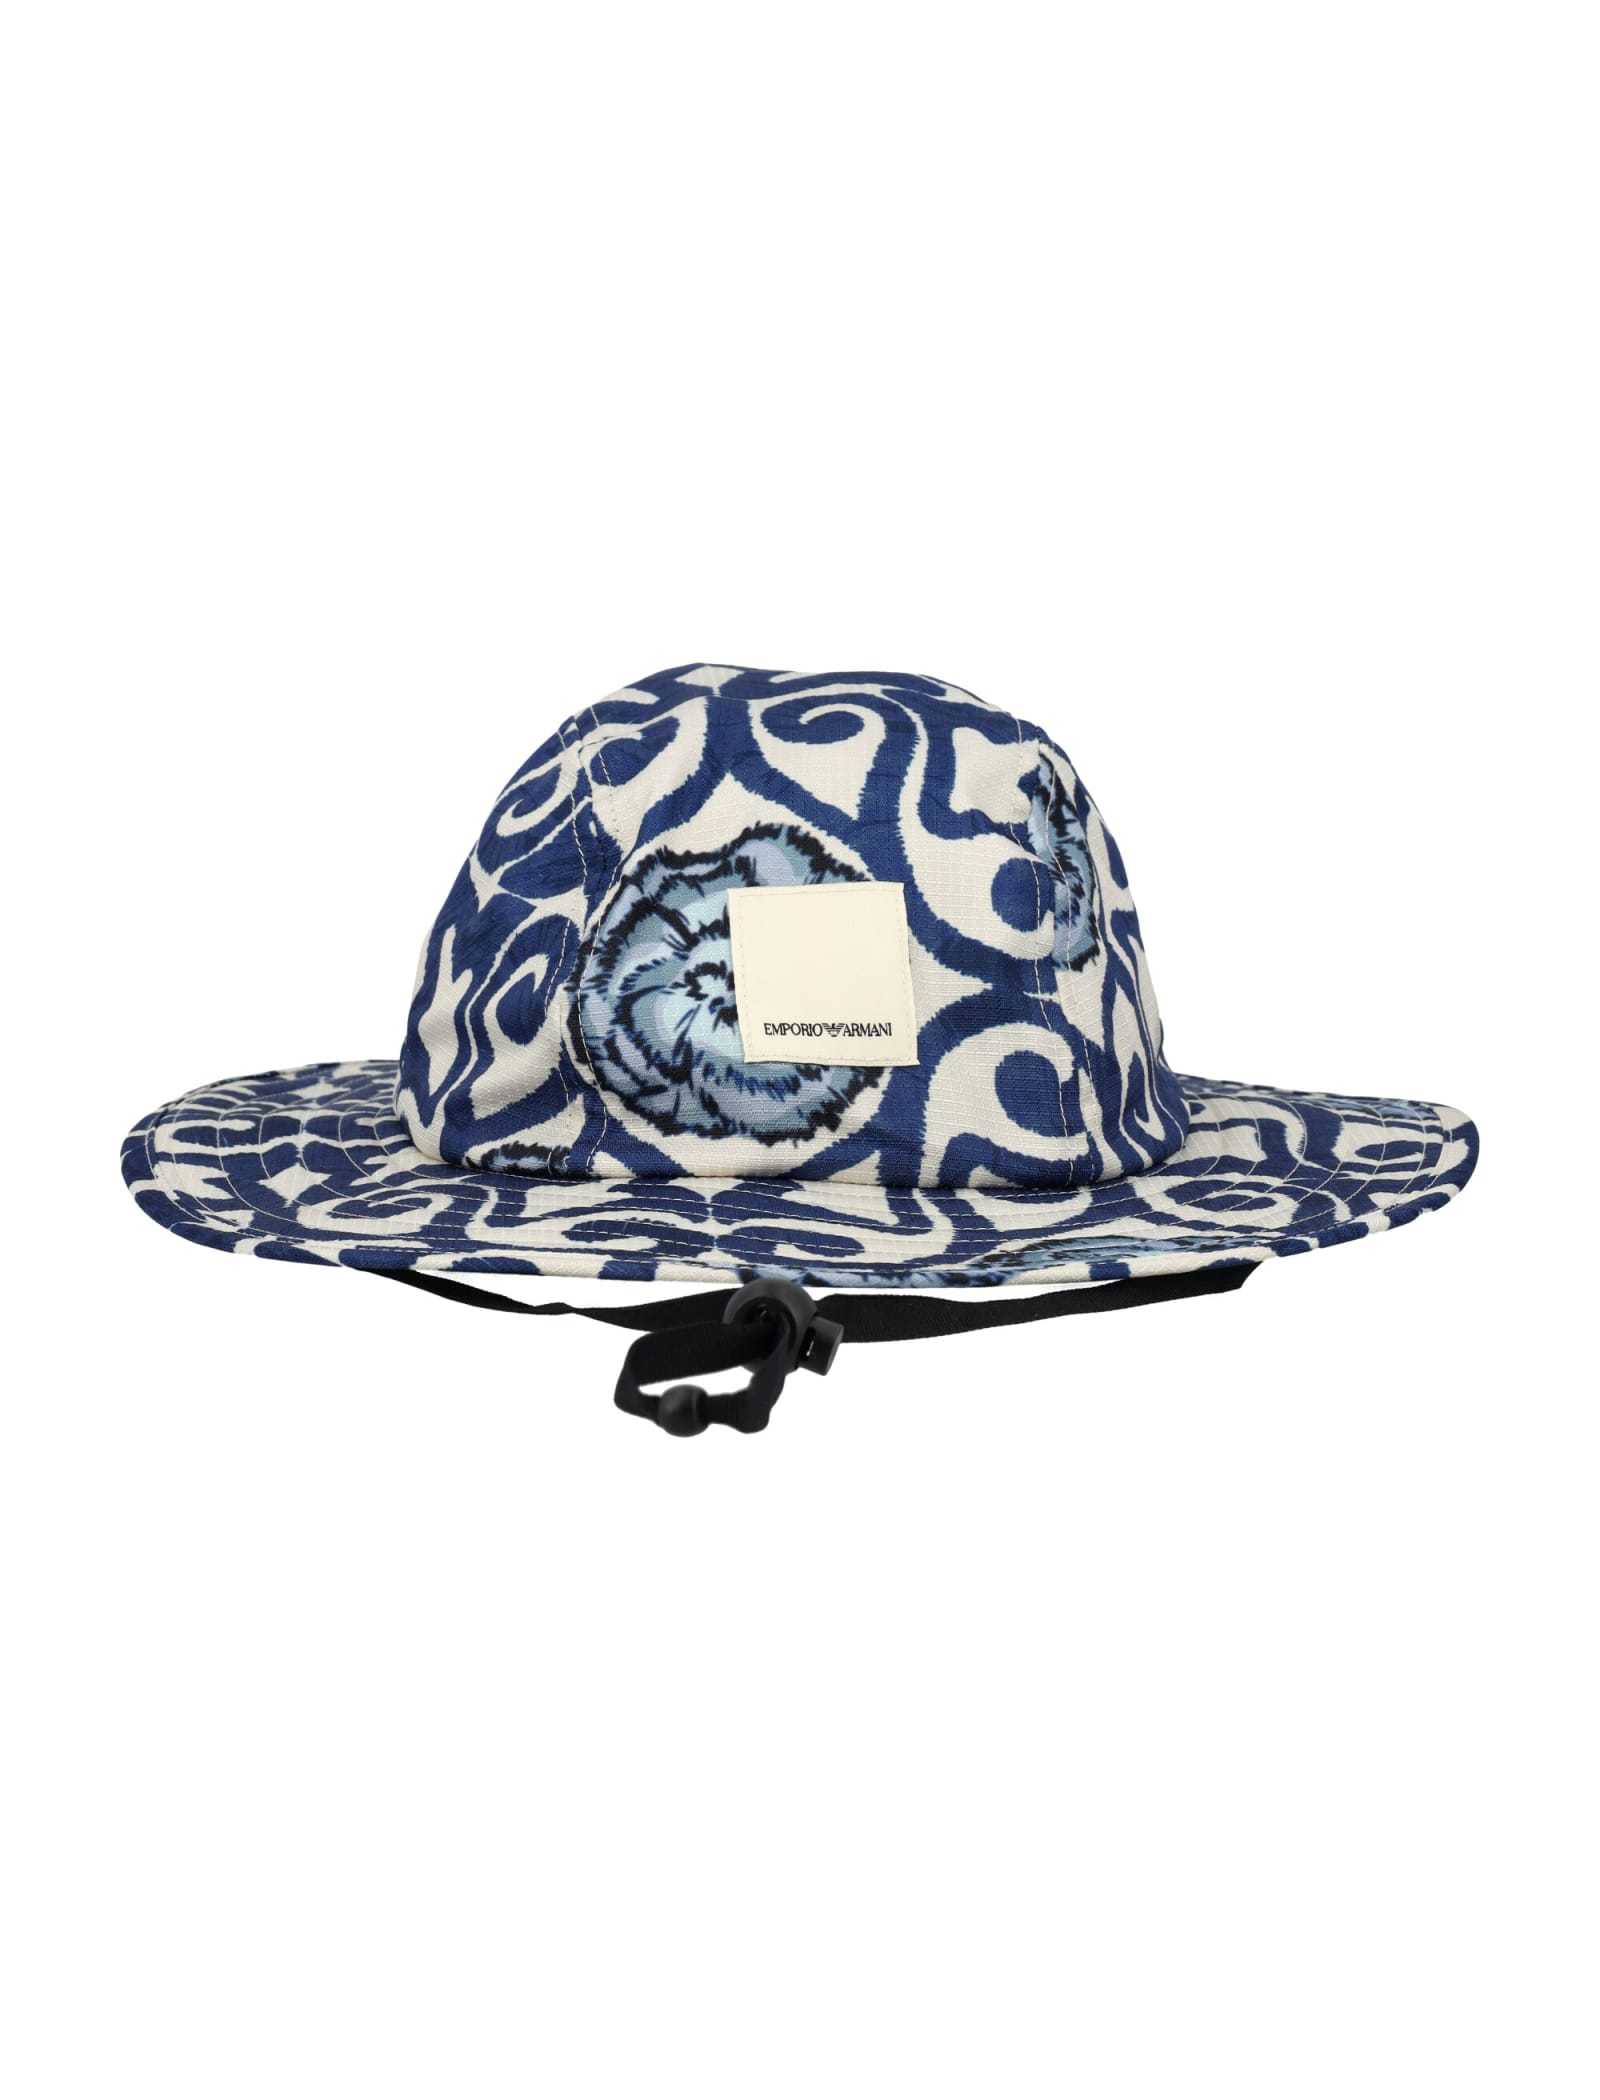 Emporio Armani Brocade Graphic Print Hat